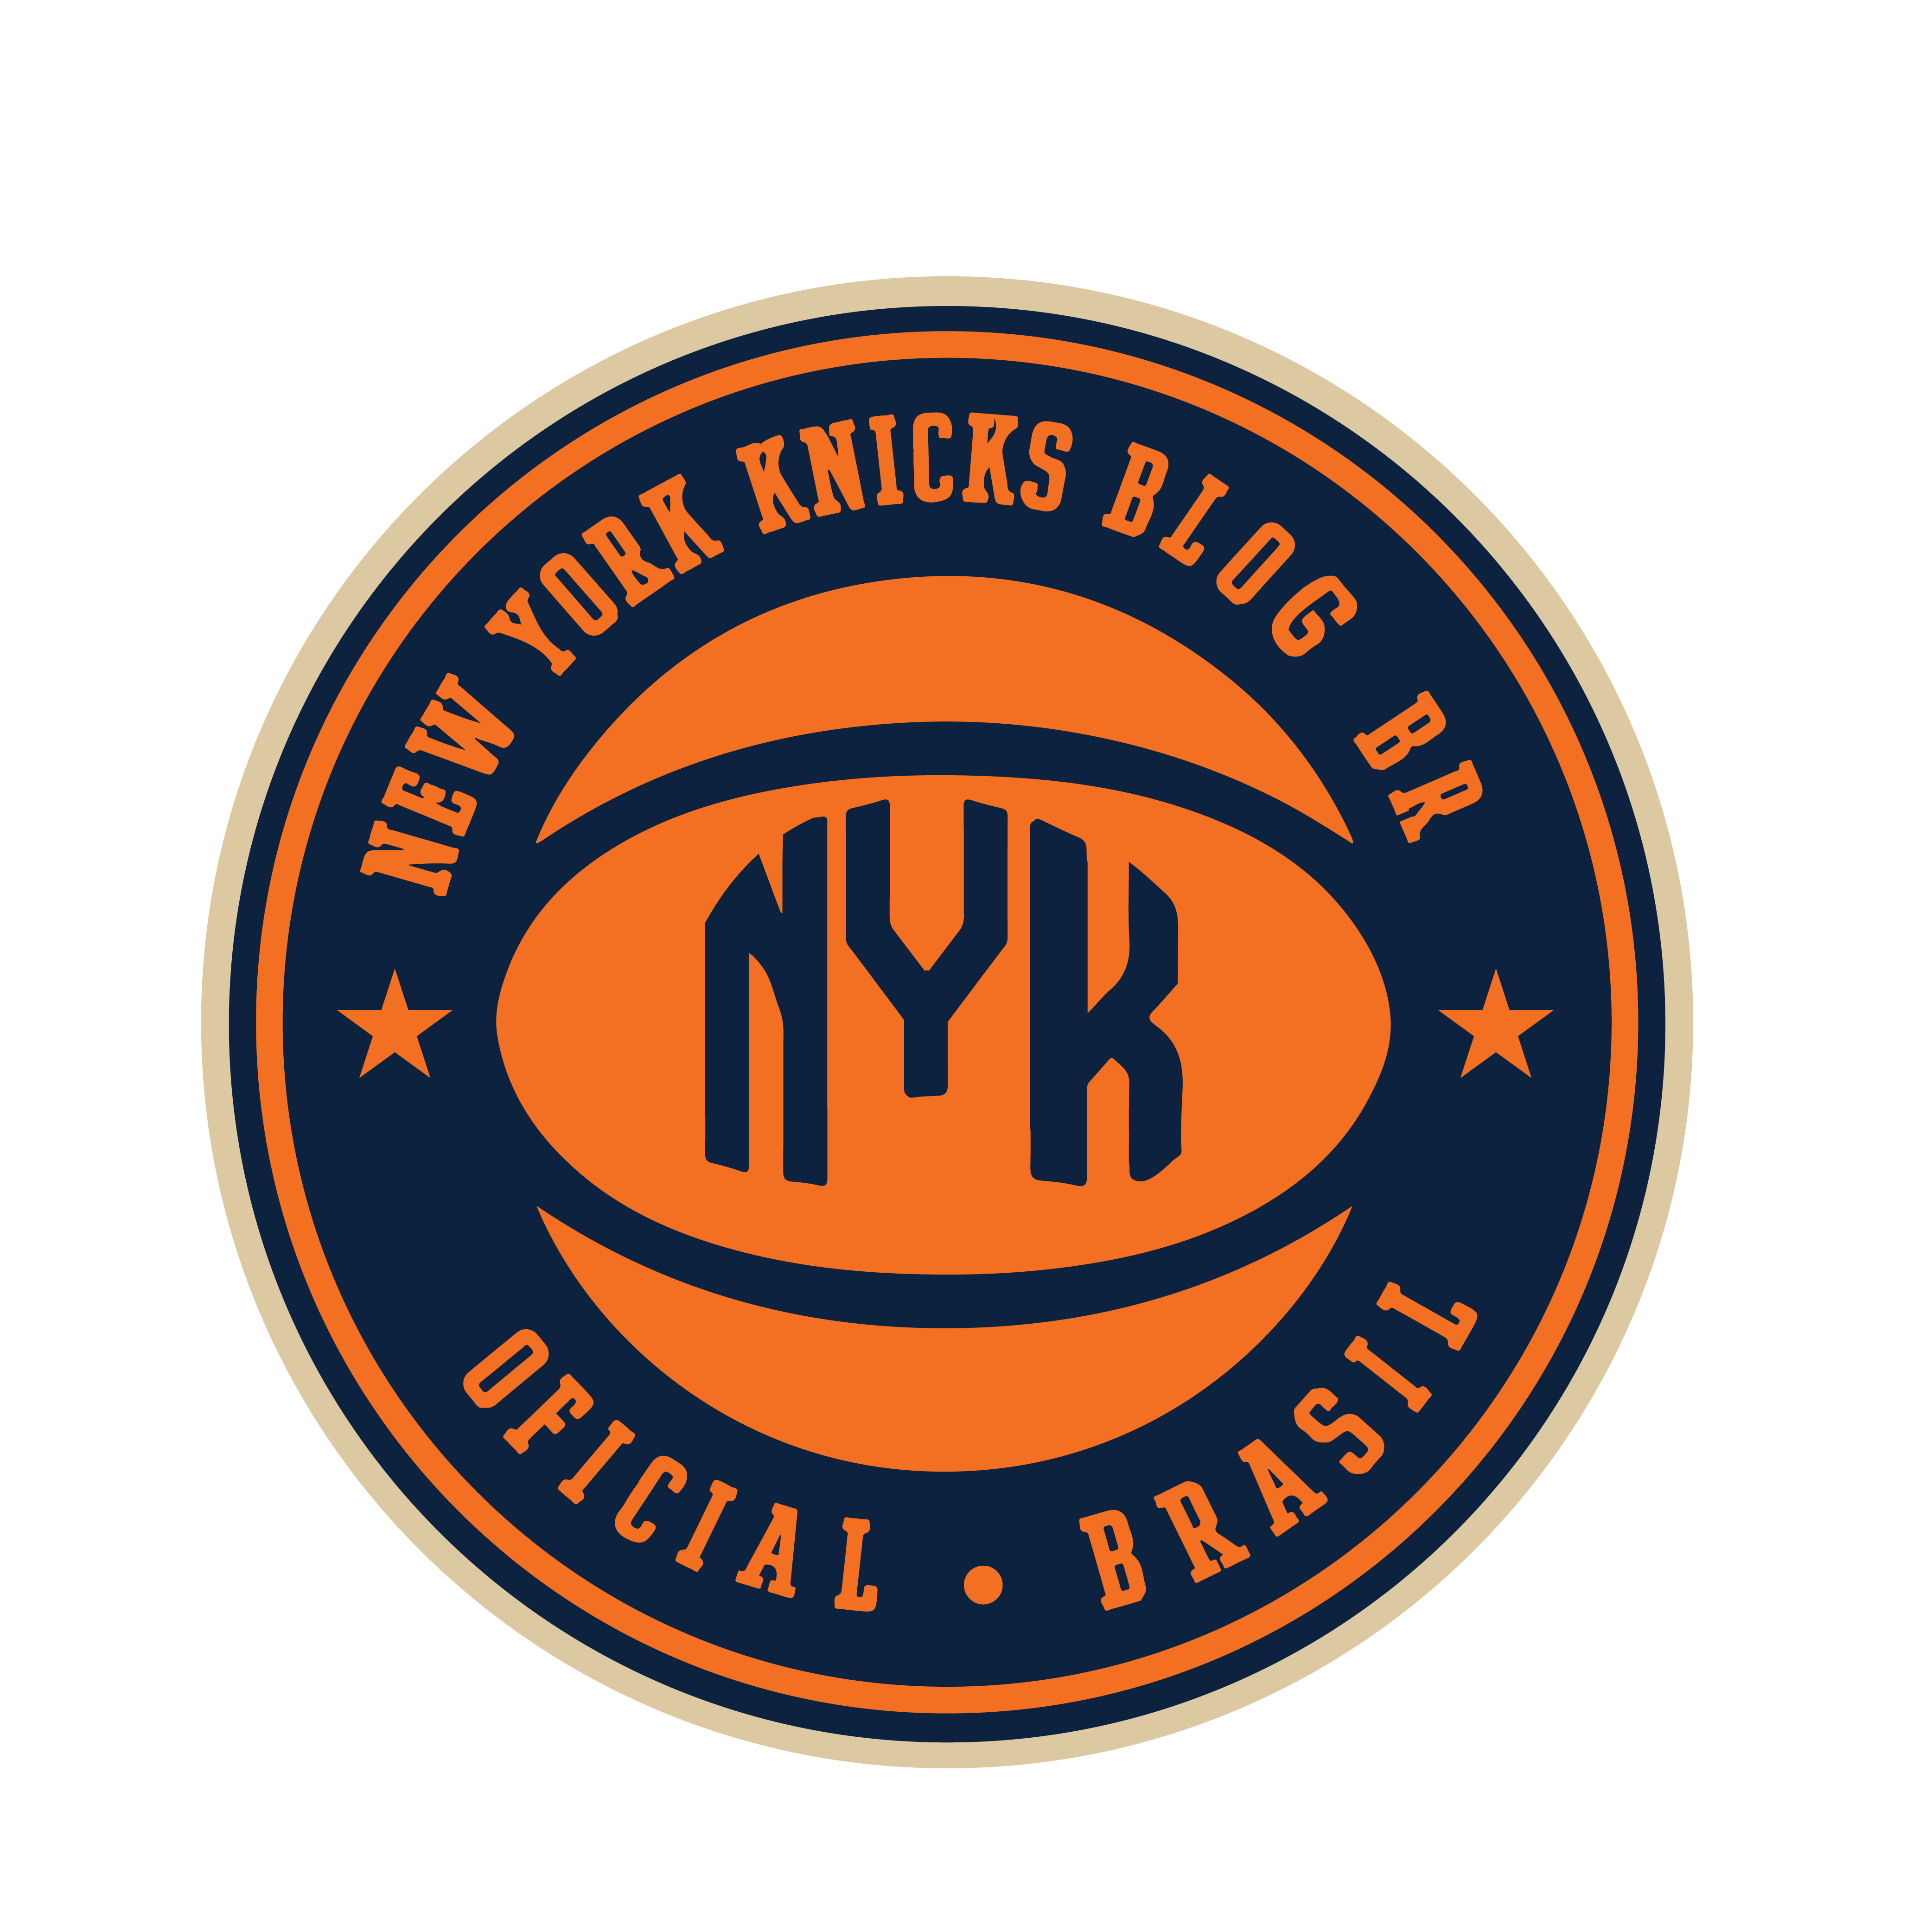 https://blognyknicks.files.wordpress.com/2017/10/logotipo-blog-nyk-01.png